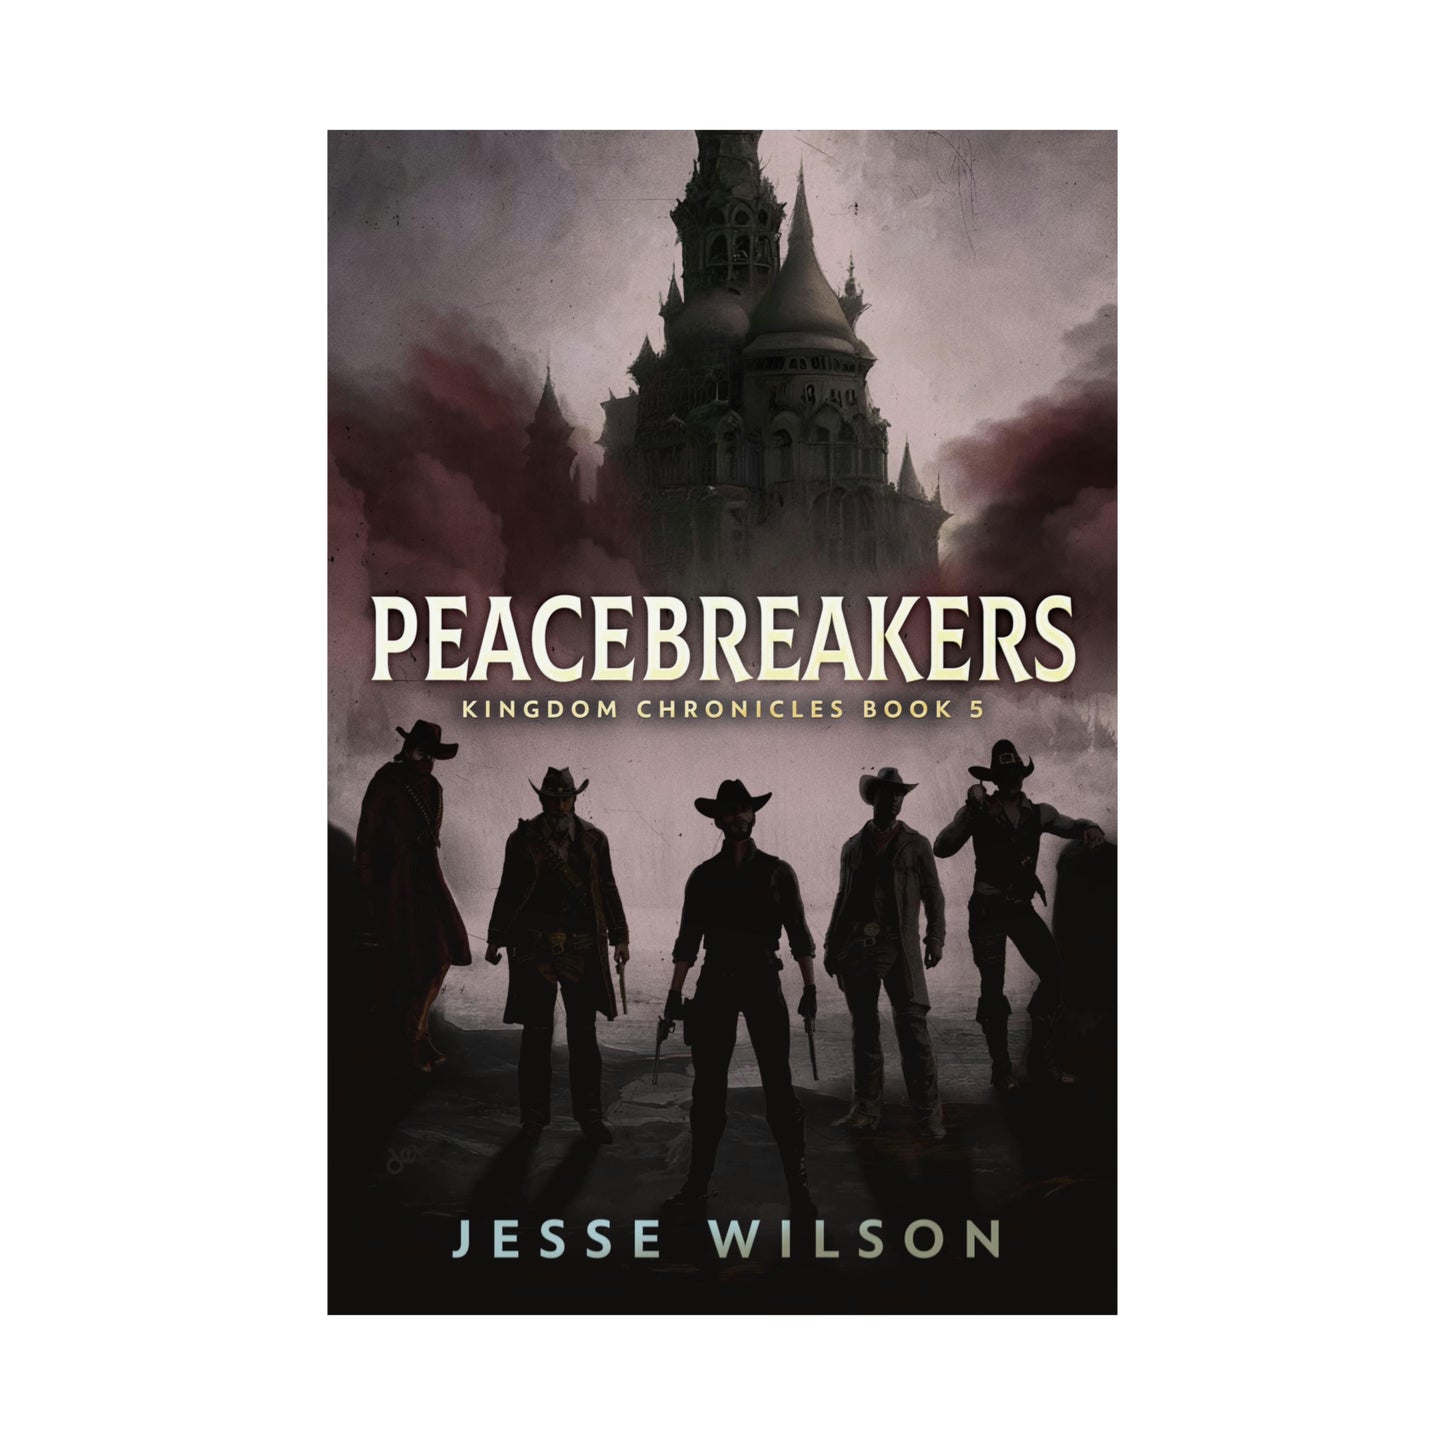 Peacebreakers - Matte Poster